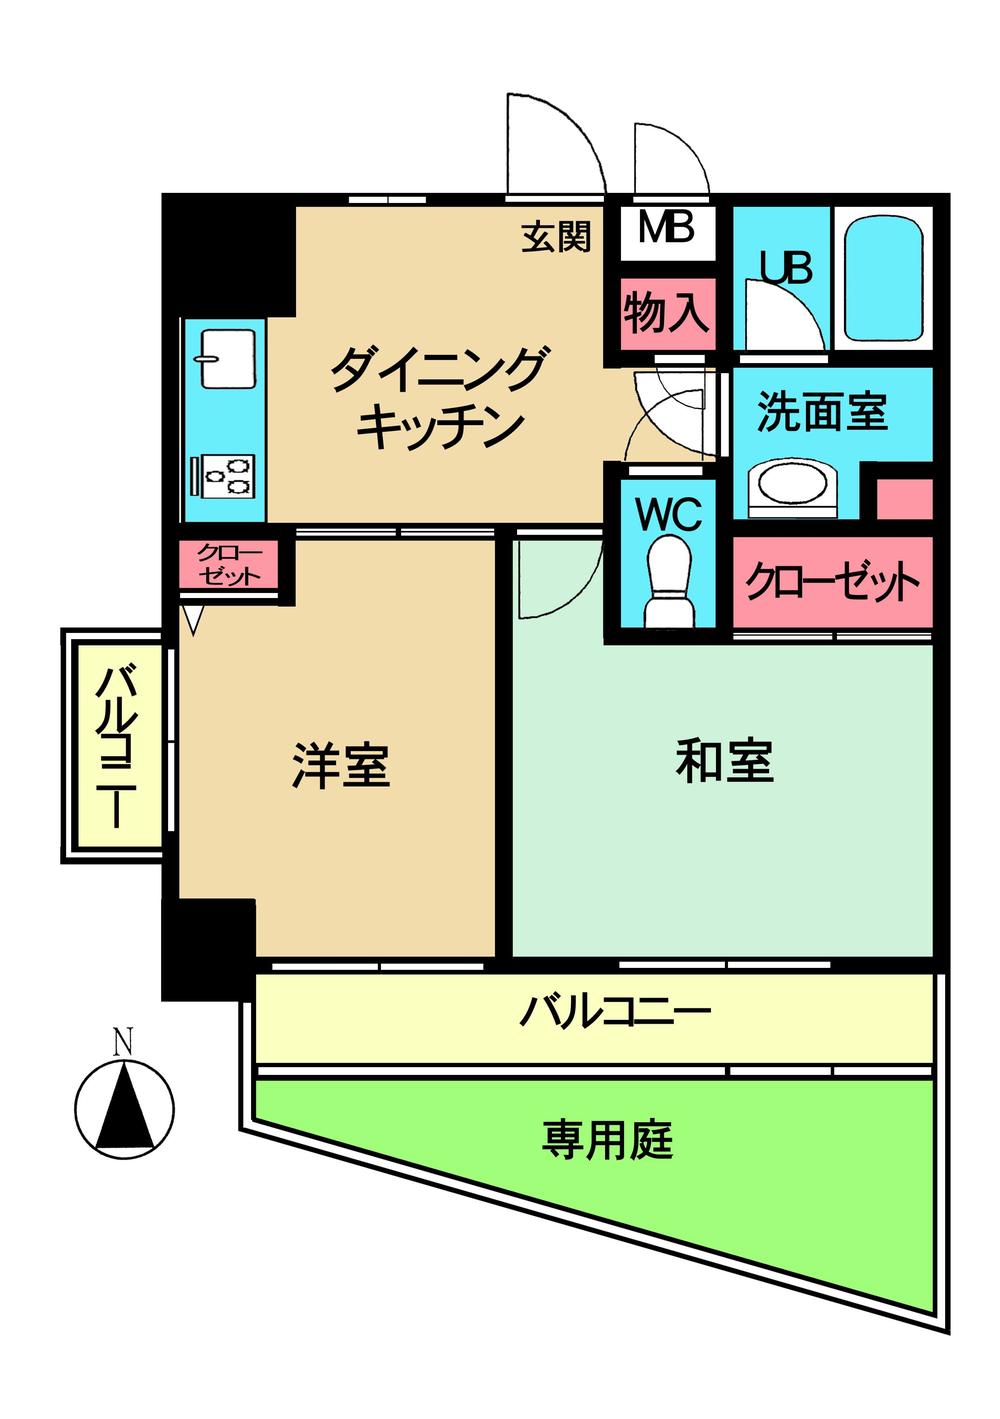 Floor plan. 2DK, Price 6.5 million yen, Occupied area 35.84 sq m , Balcony area 7.5 sq m floor plan